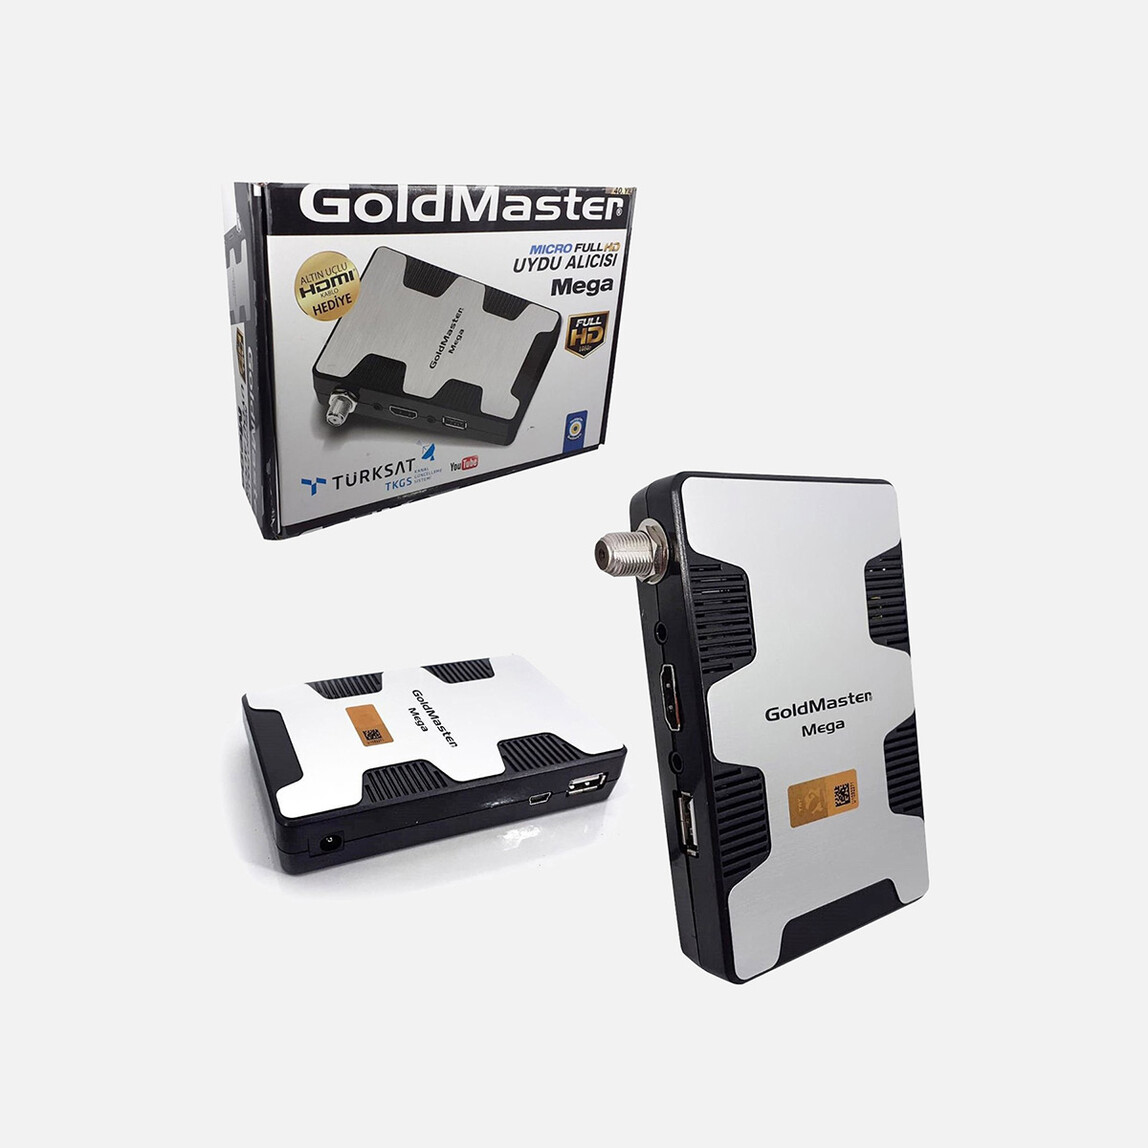    Goldmaster Uydu Alıcı Mega Micro Full Hd  